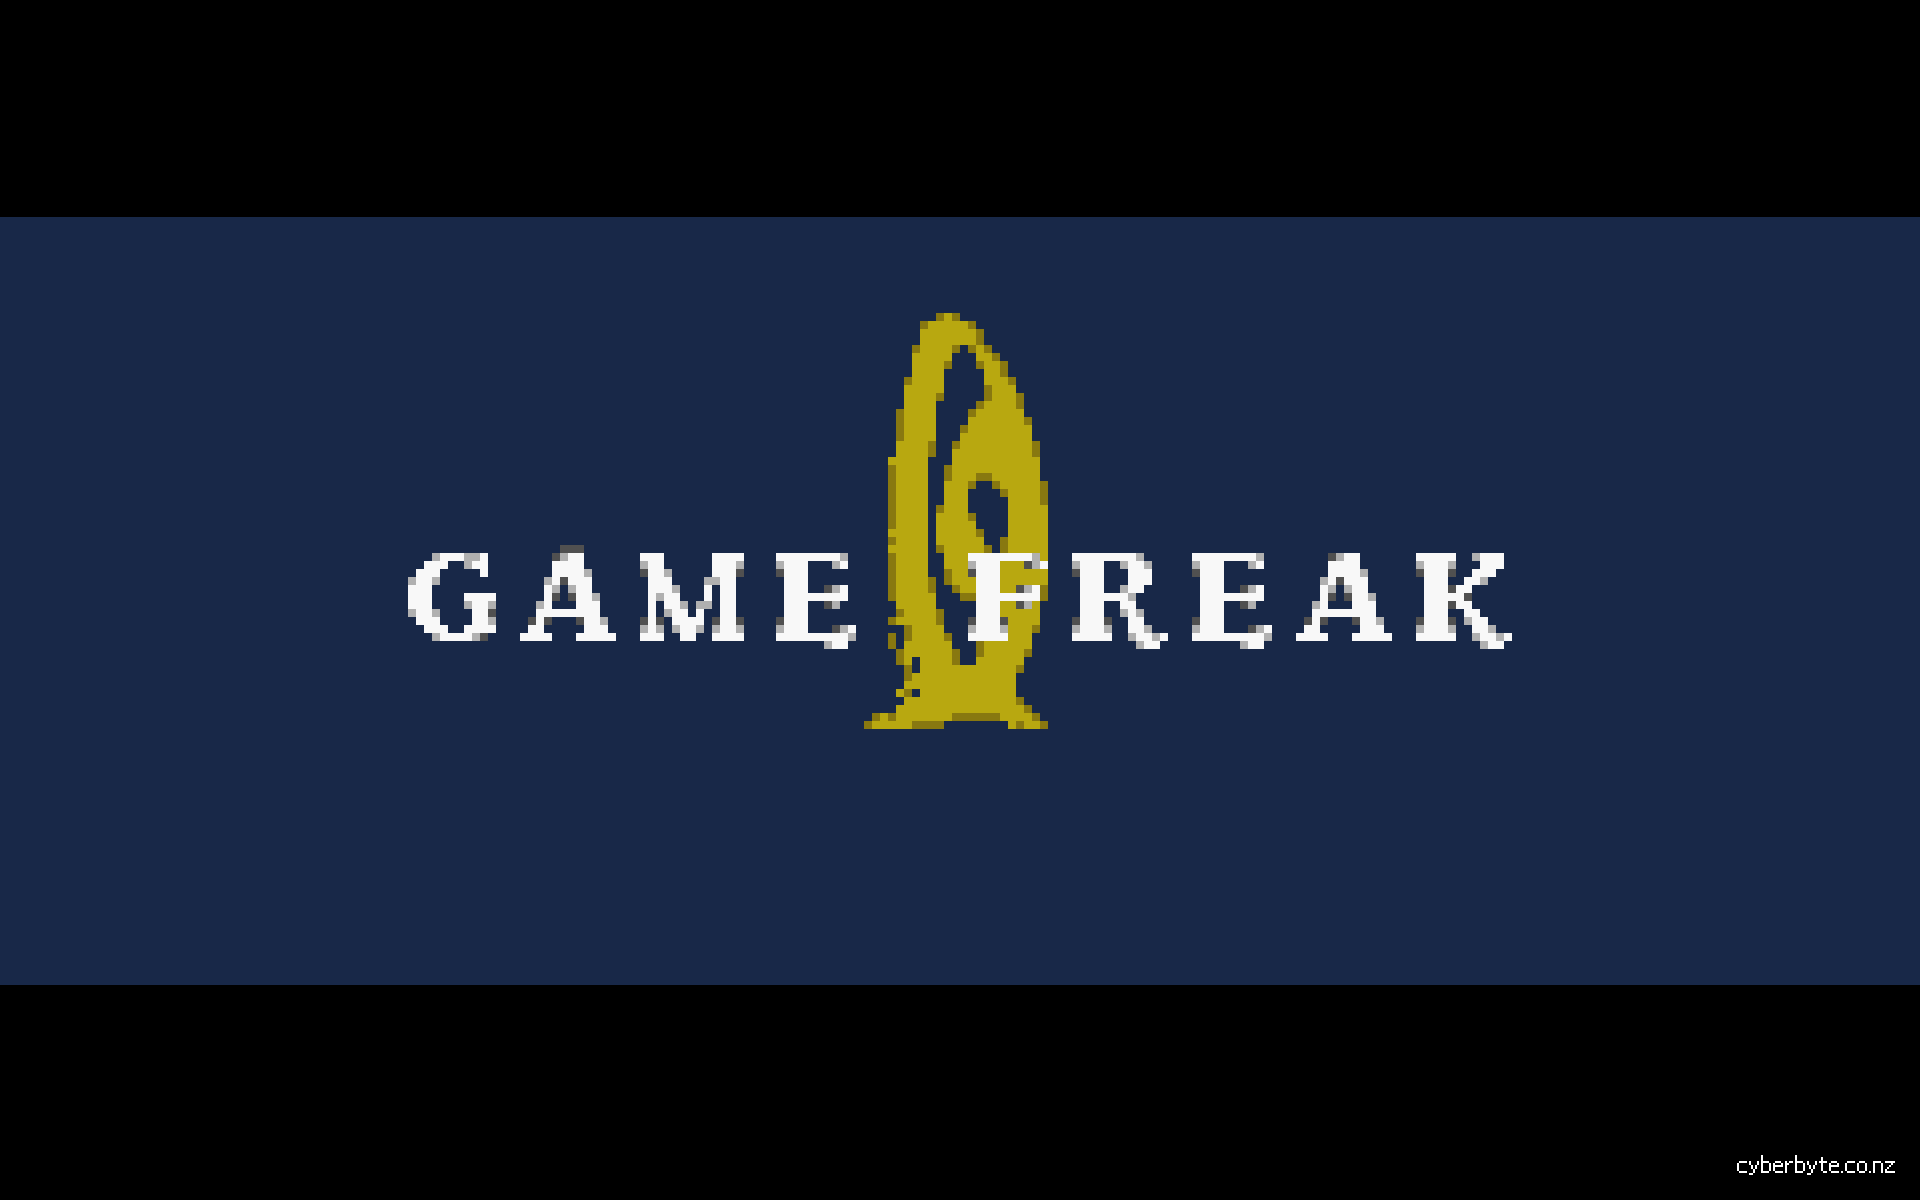 Game Freak